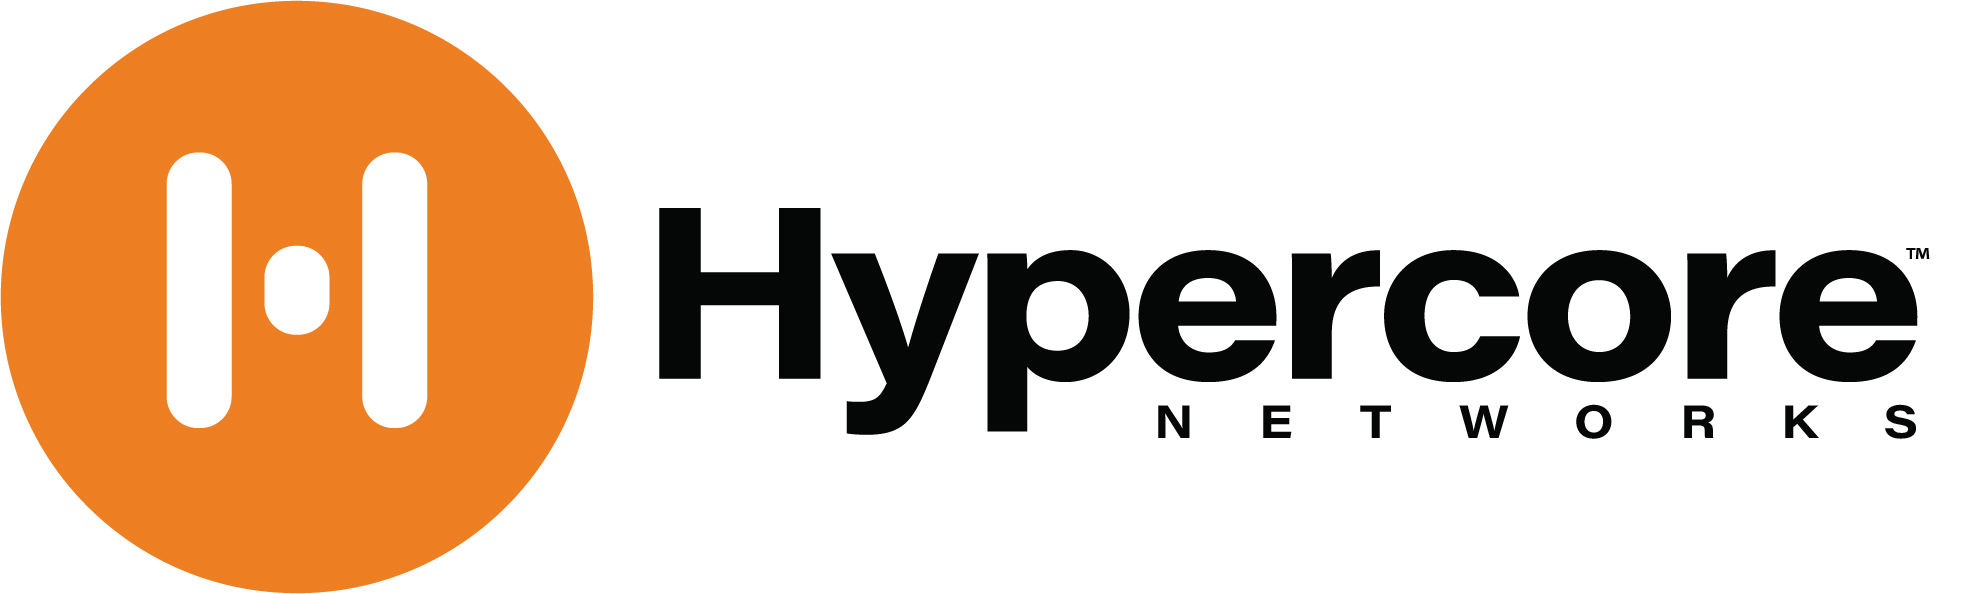 Hypercore_Networks_Telnet_Group_Michigan